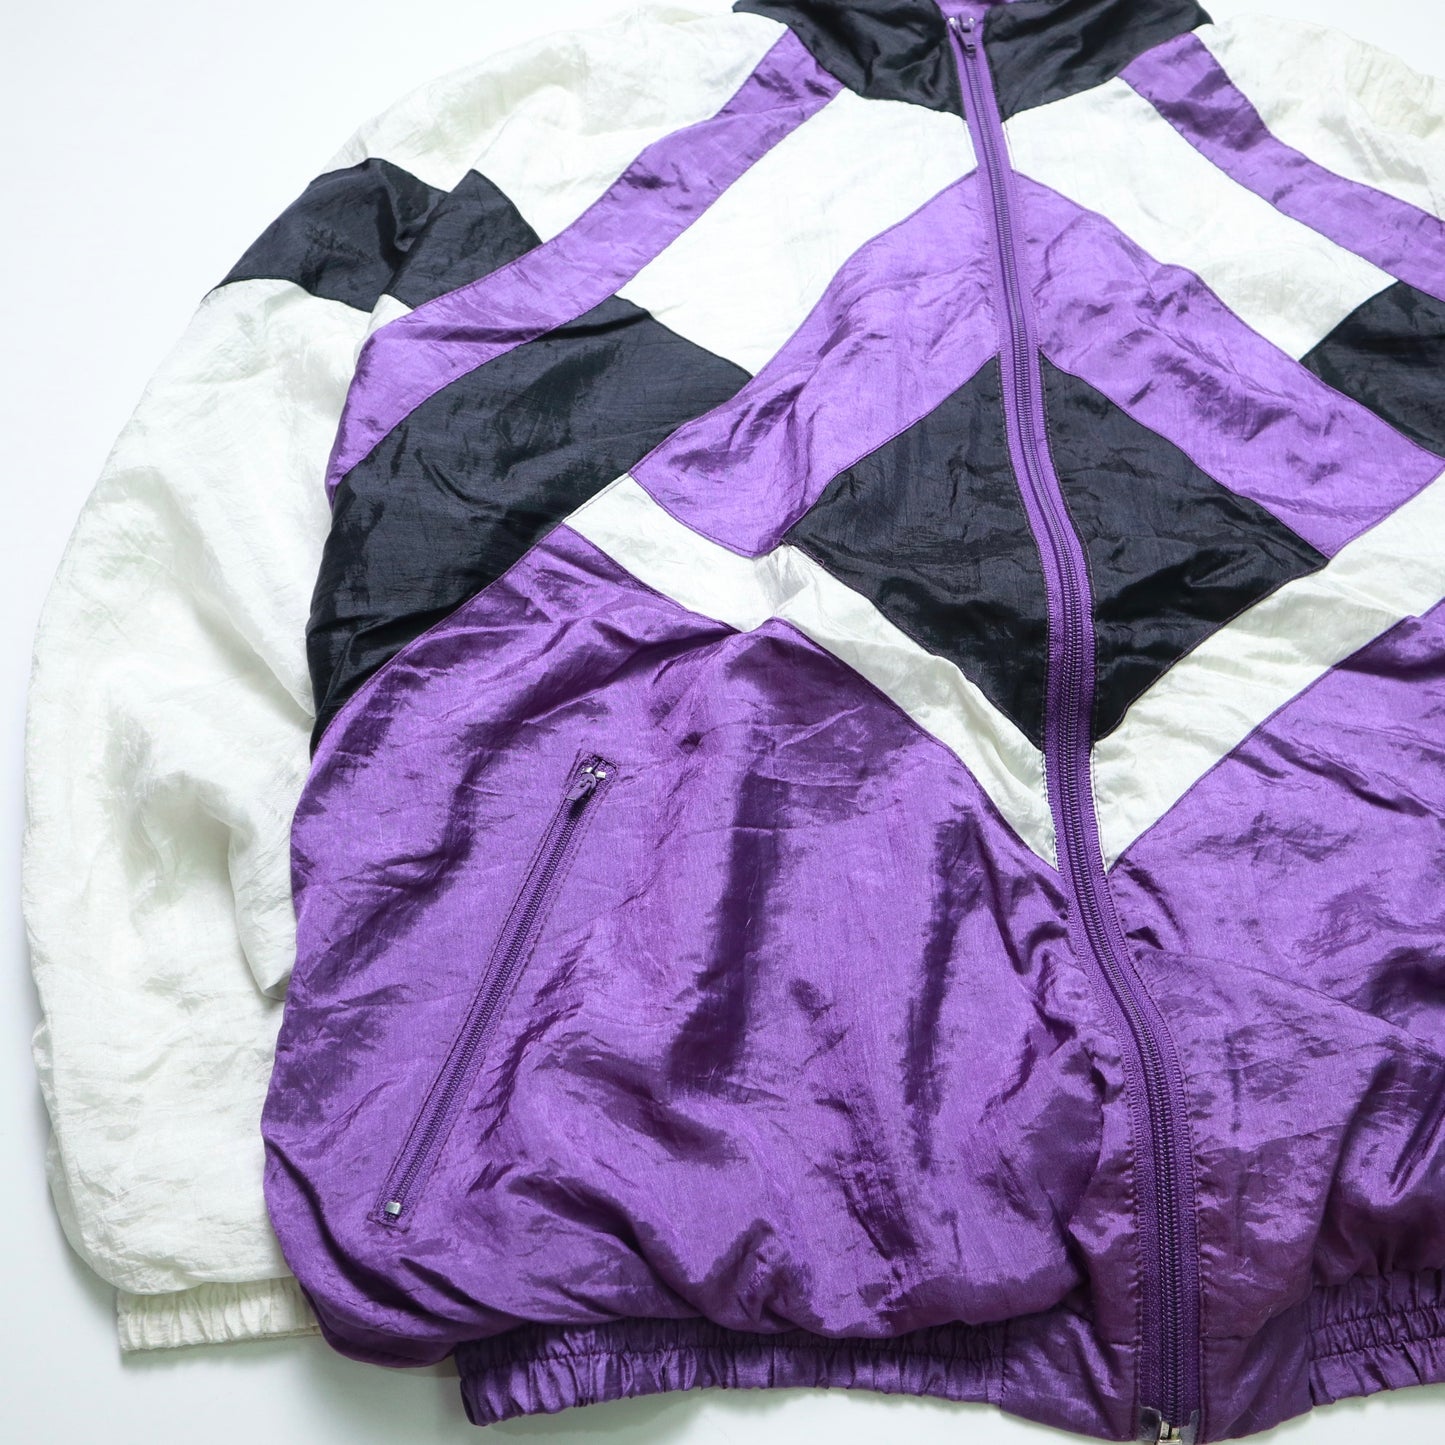 90's Crazy Nylon jacket Purple and white color contrast nylon jacket windproof jacket